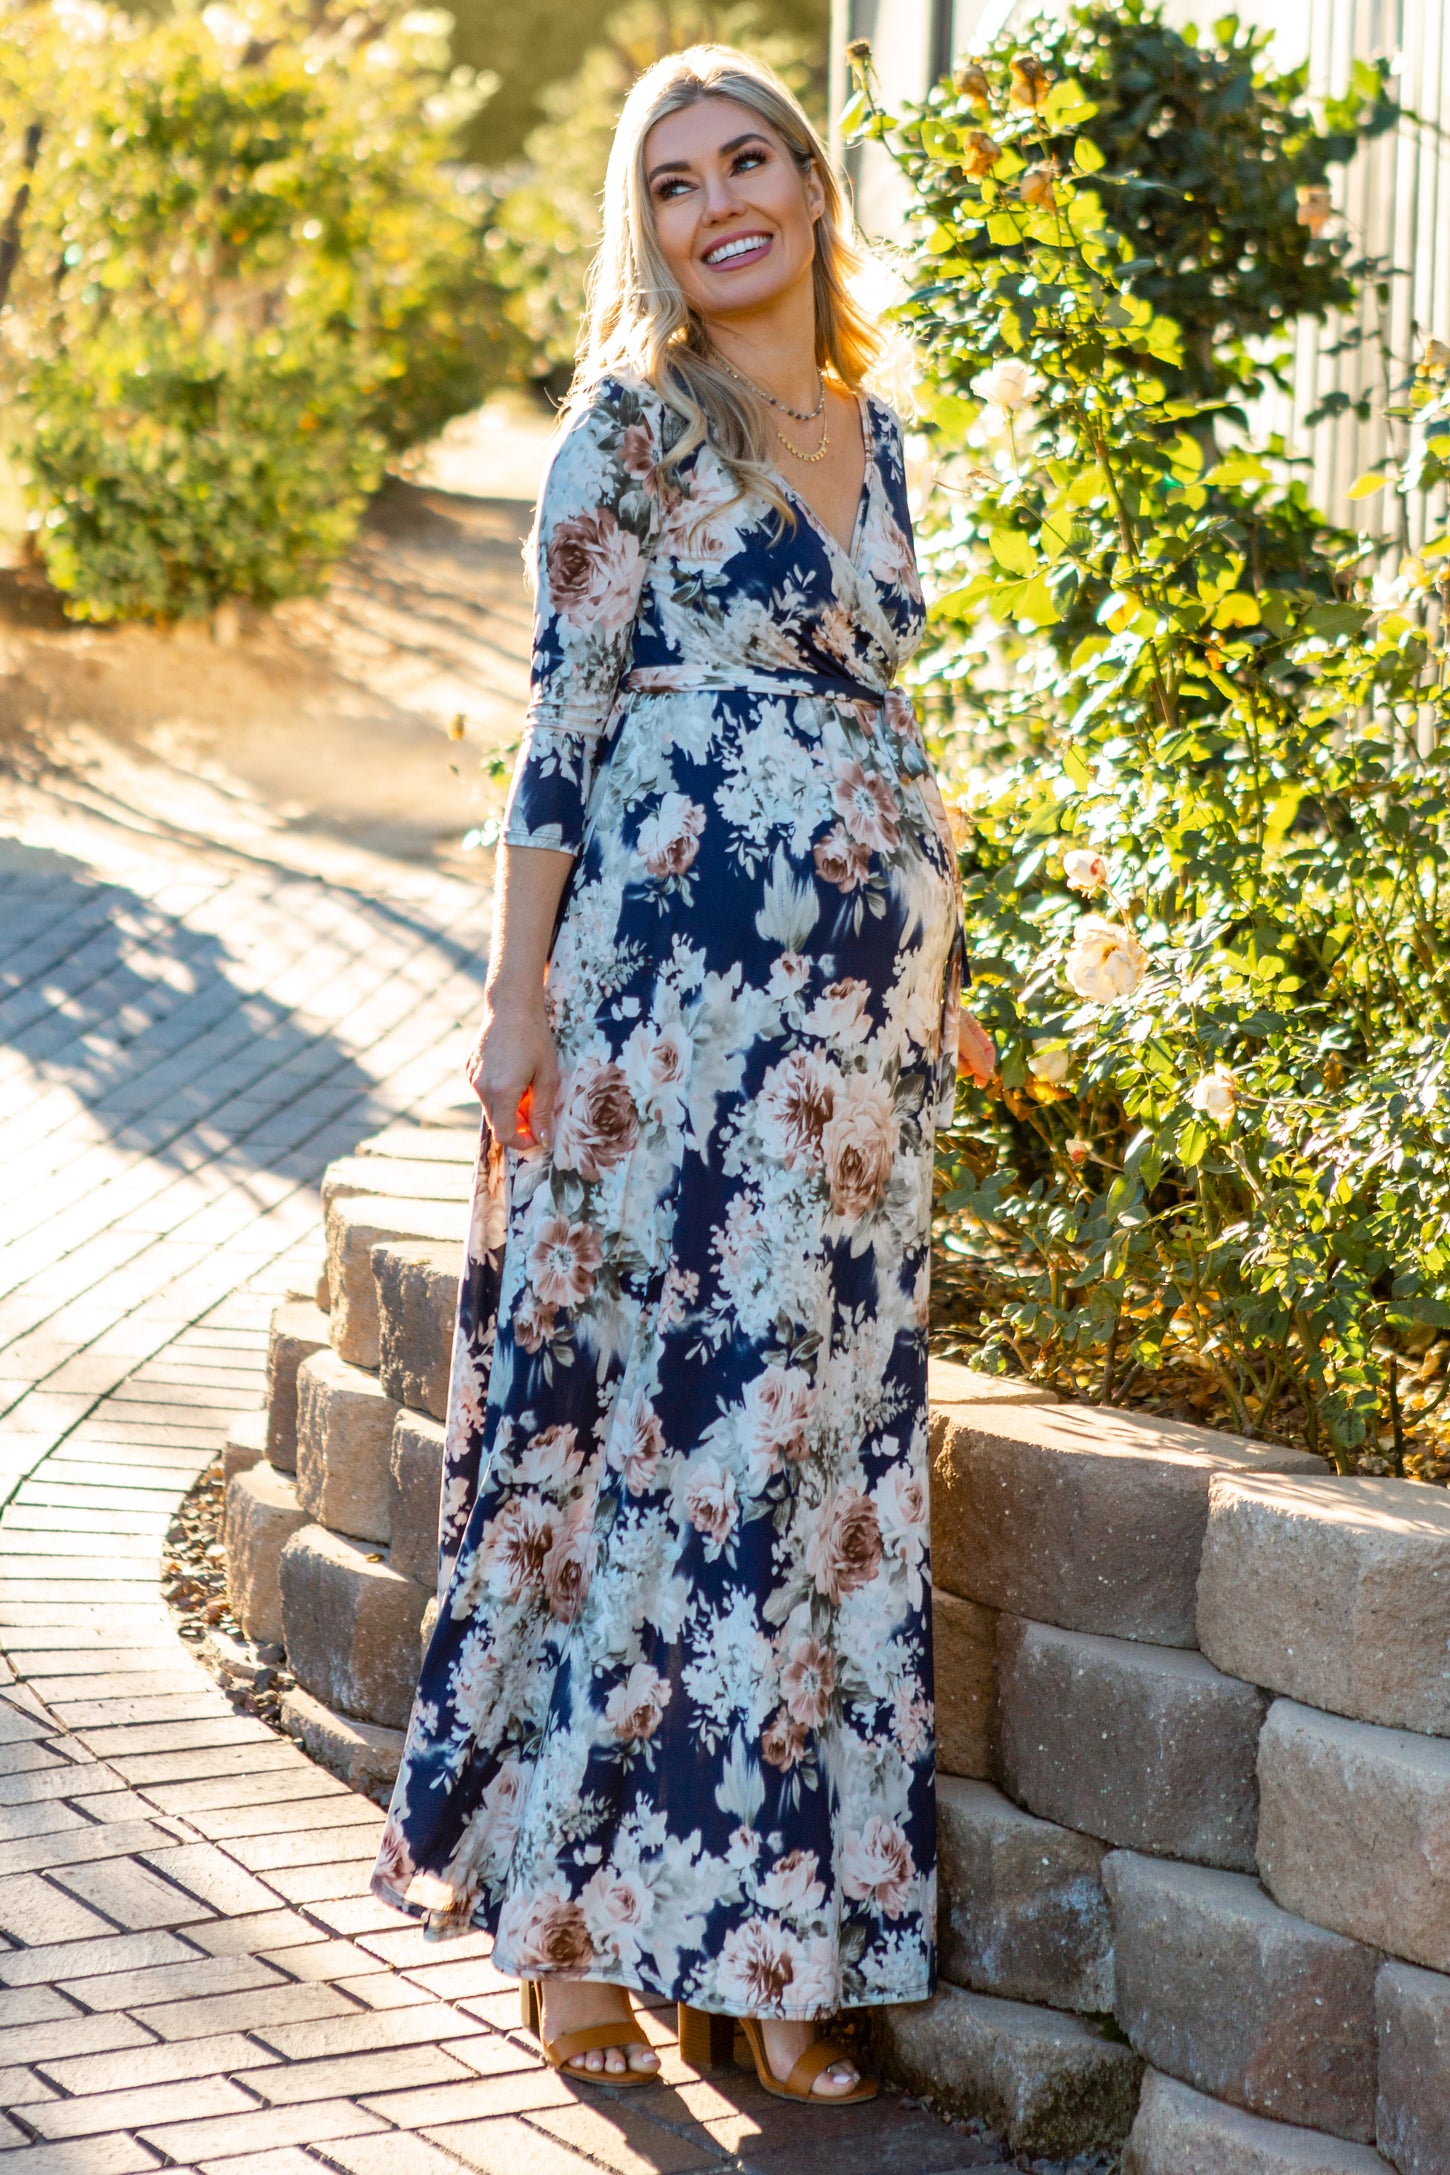 PinkBlush Blue Floral Sash Tie Maternity/Nursing Maxi Dress